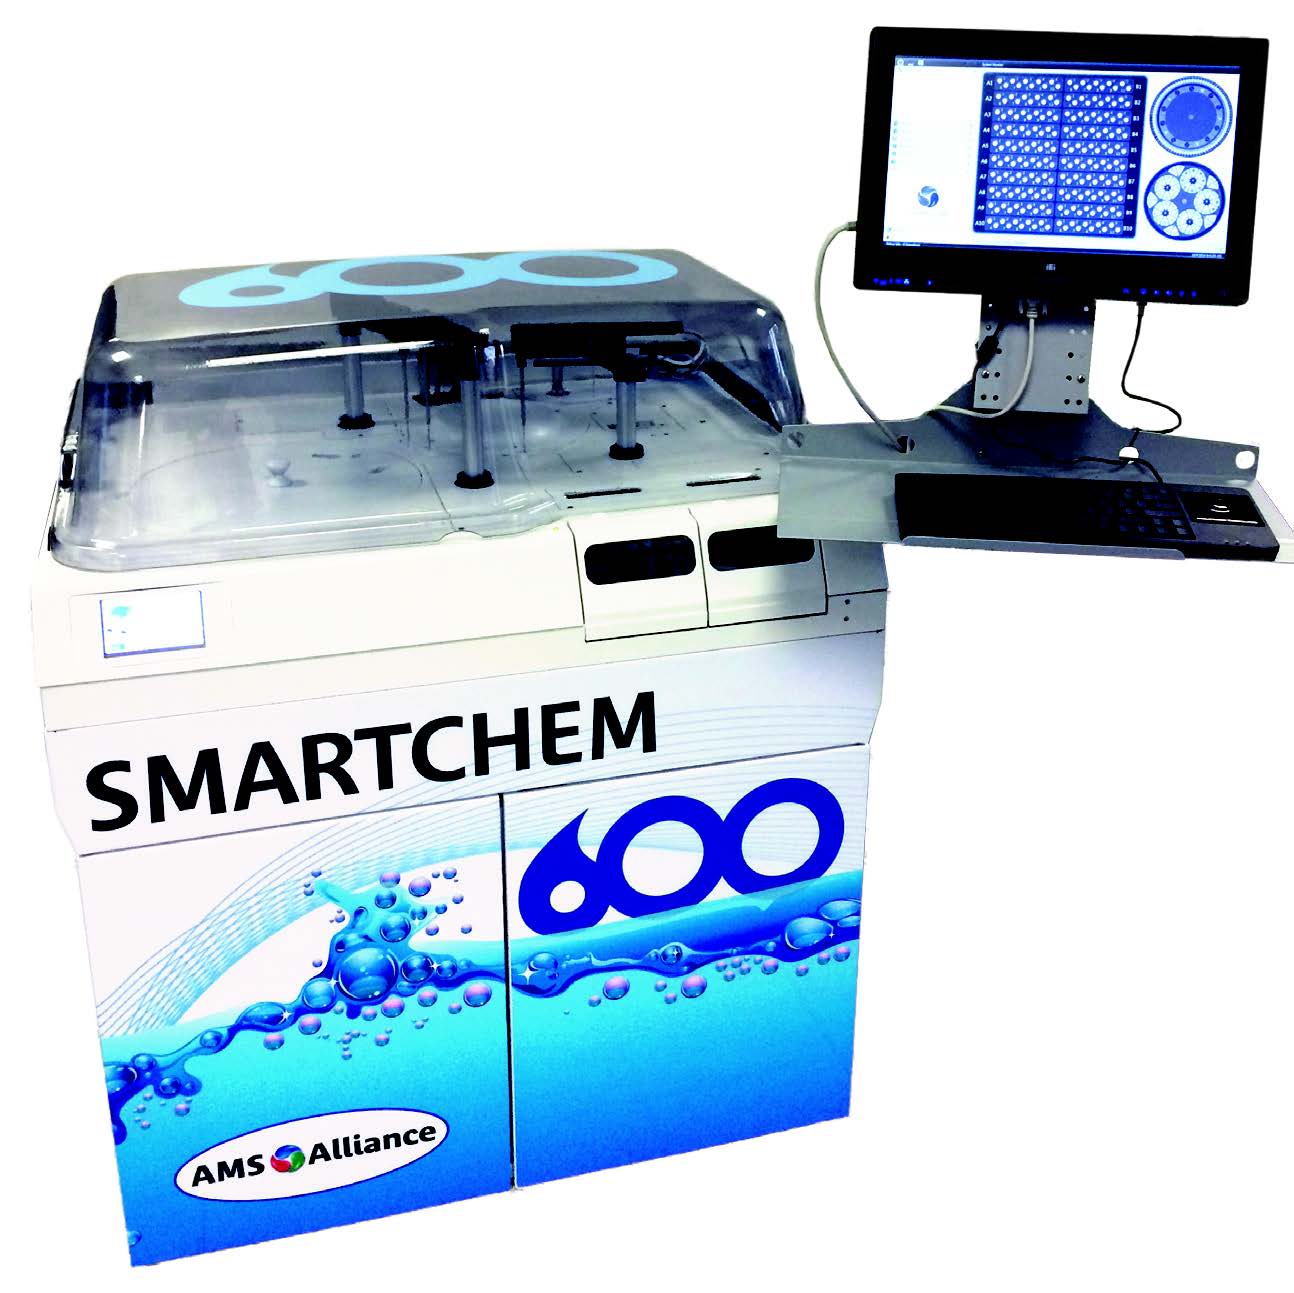 Smartchem 600 EN.jpg